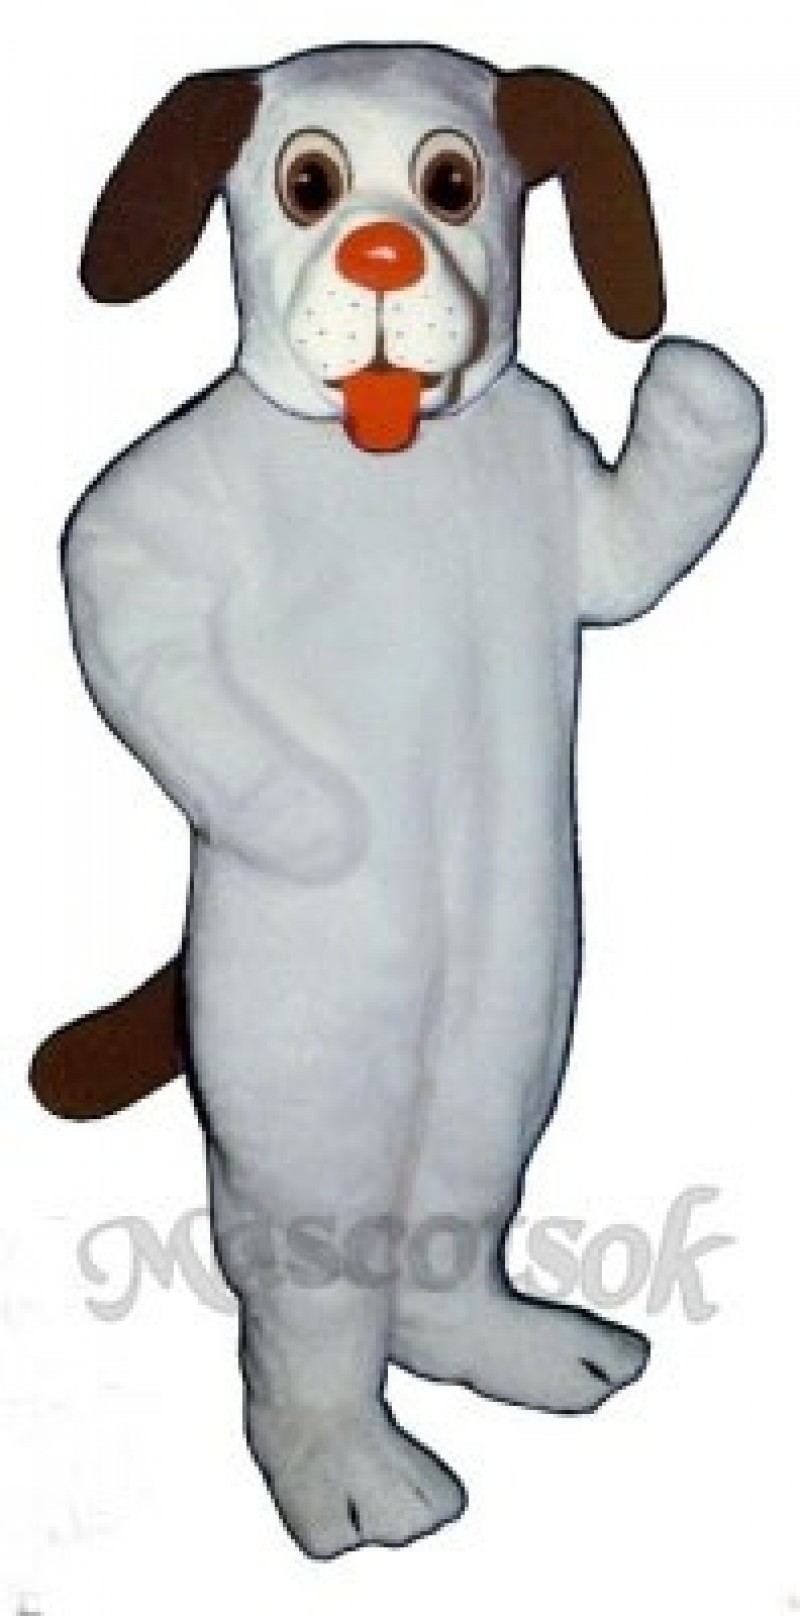 Cute Beagle Dog Mascot Costume